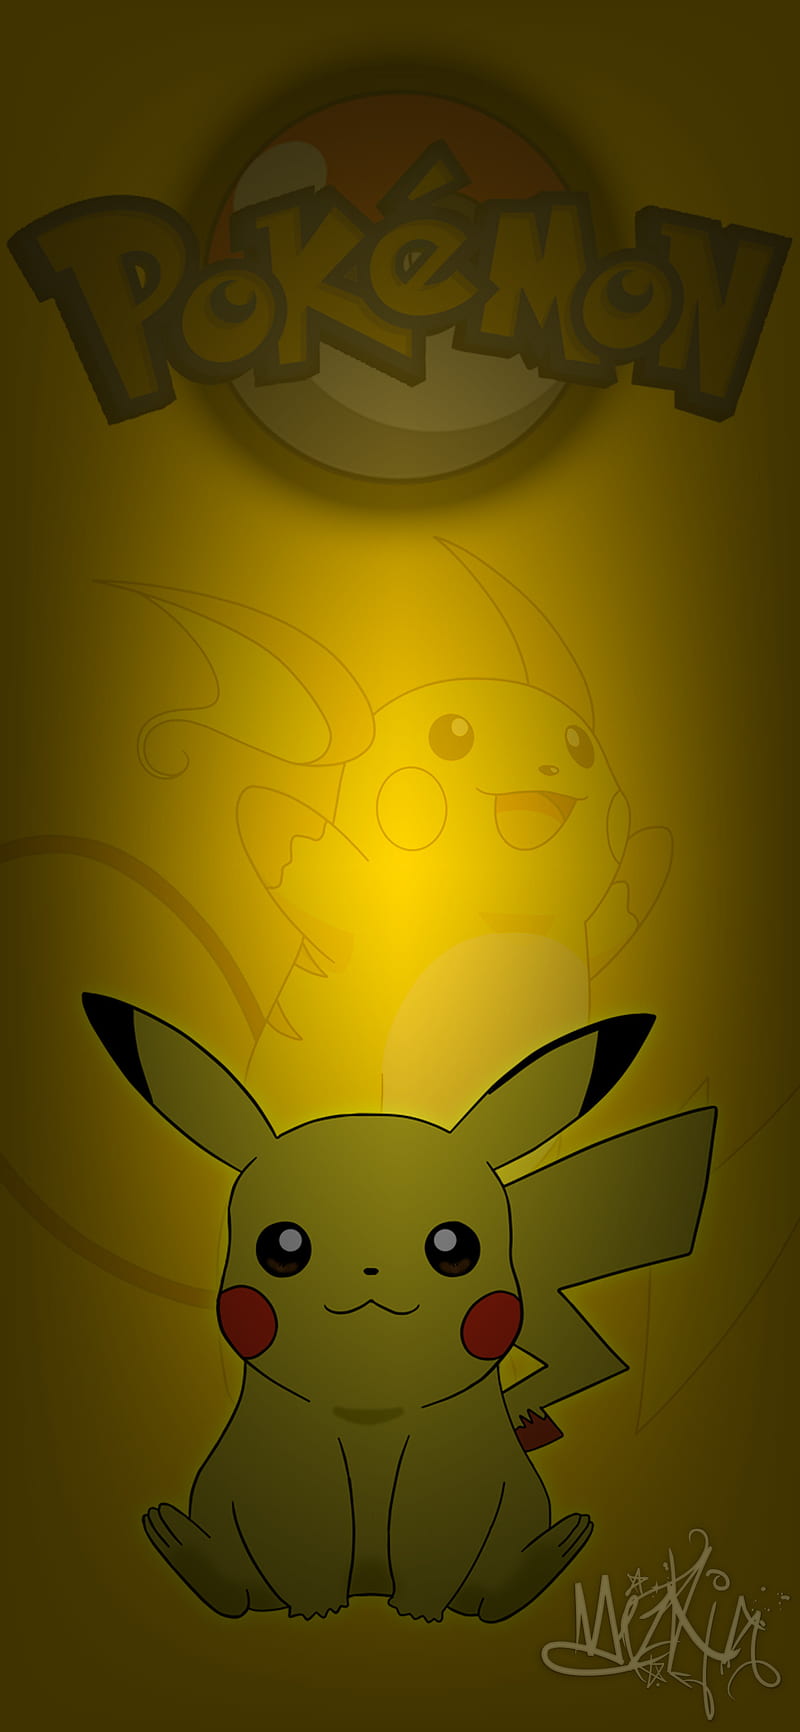 Wallpaper  Pikachu wallpaper, Pikachu wallpaper iphone, Kawaii wallpaper